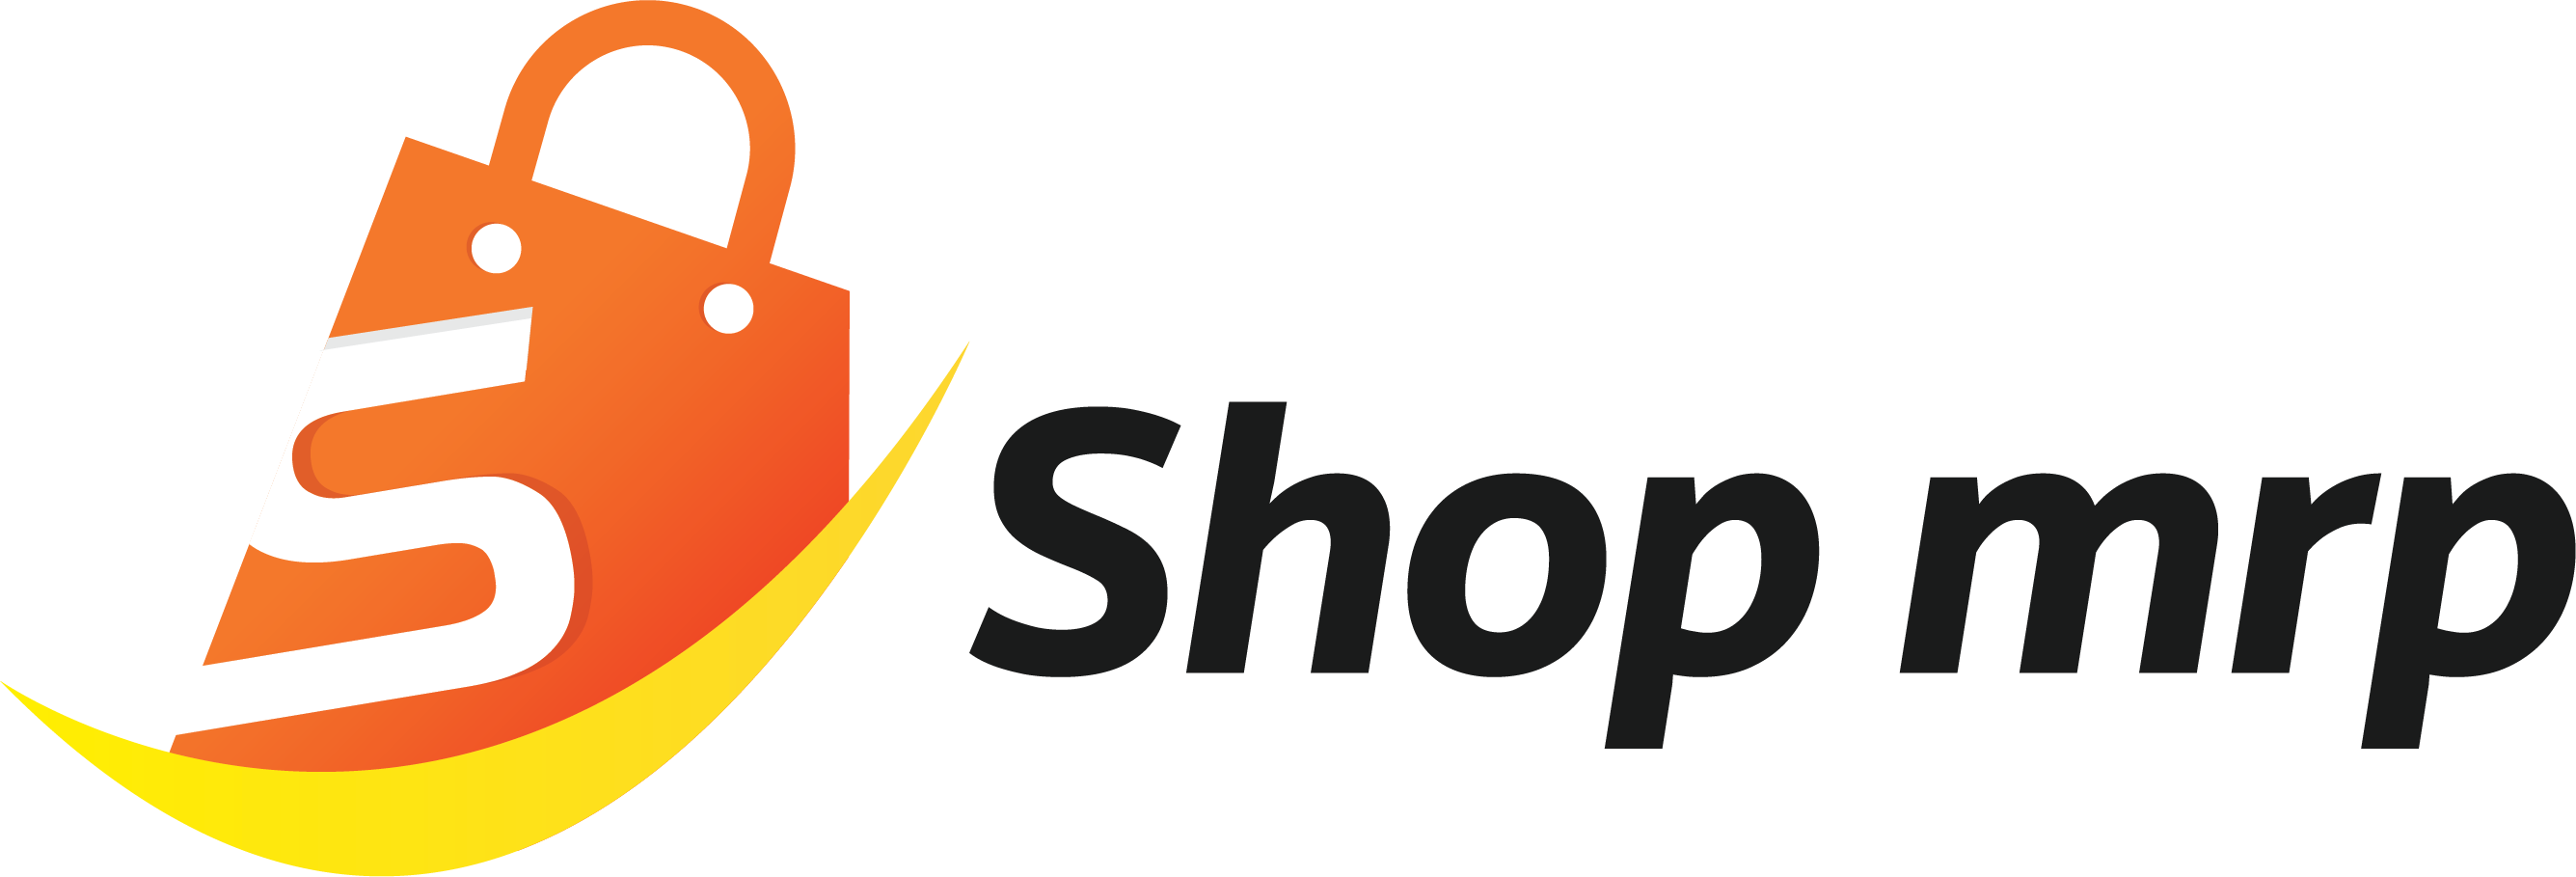 Shopmrp